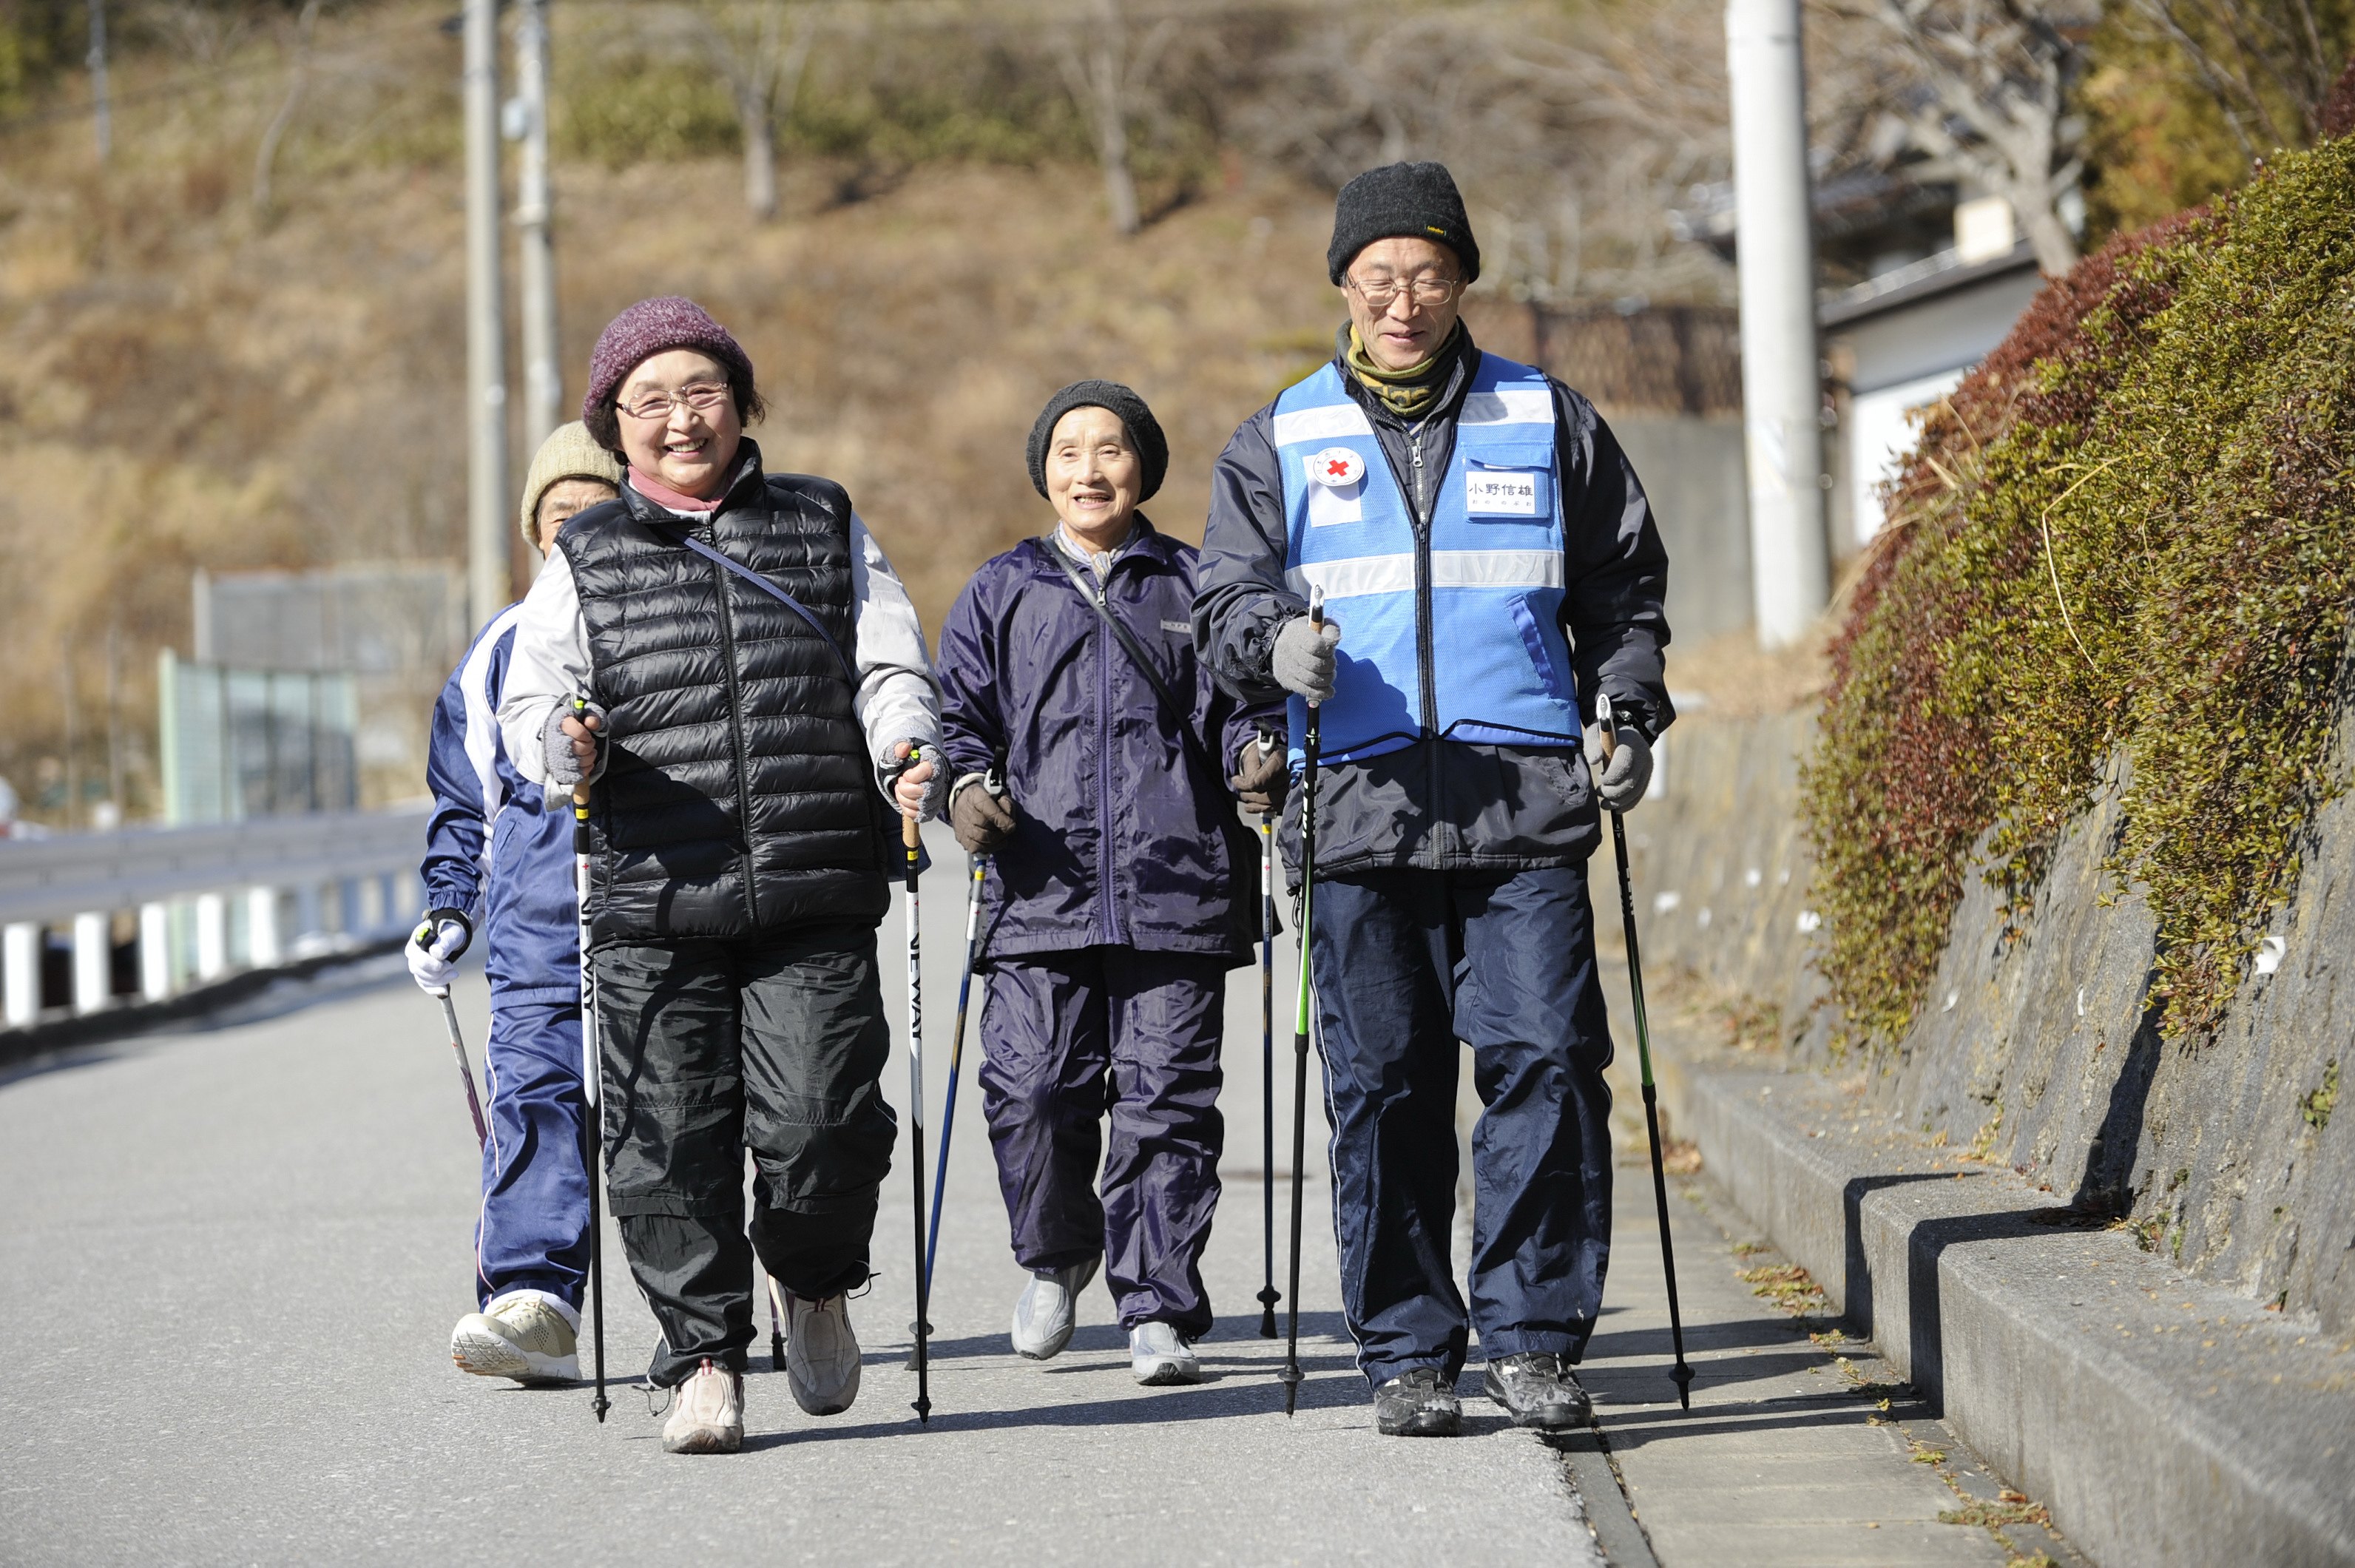 Nordic walking is one of the activities organized by Japanese Red Cross volunteers for elderly inhabitants of prefabricated temporary communities.